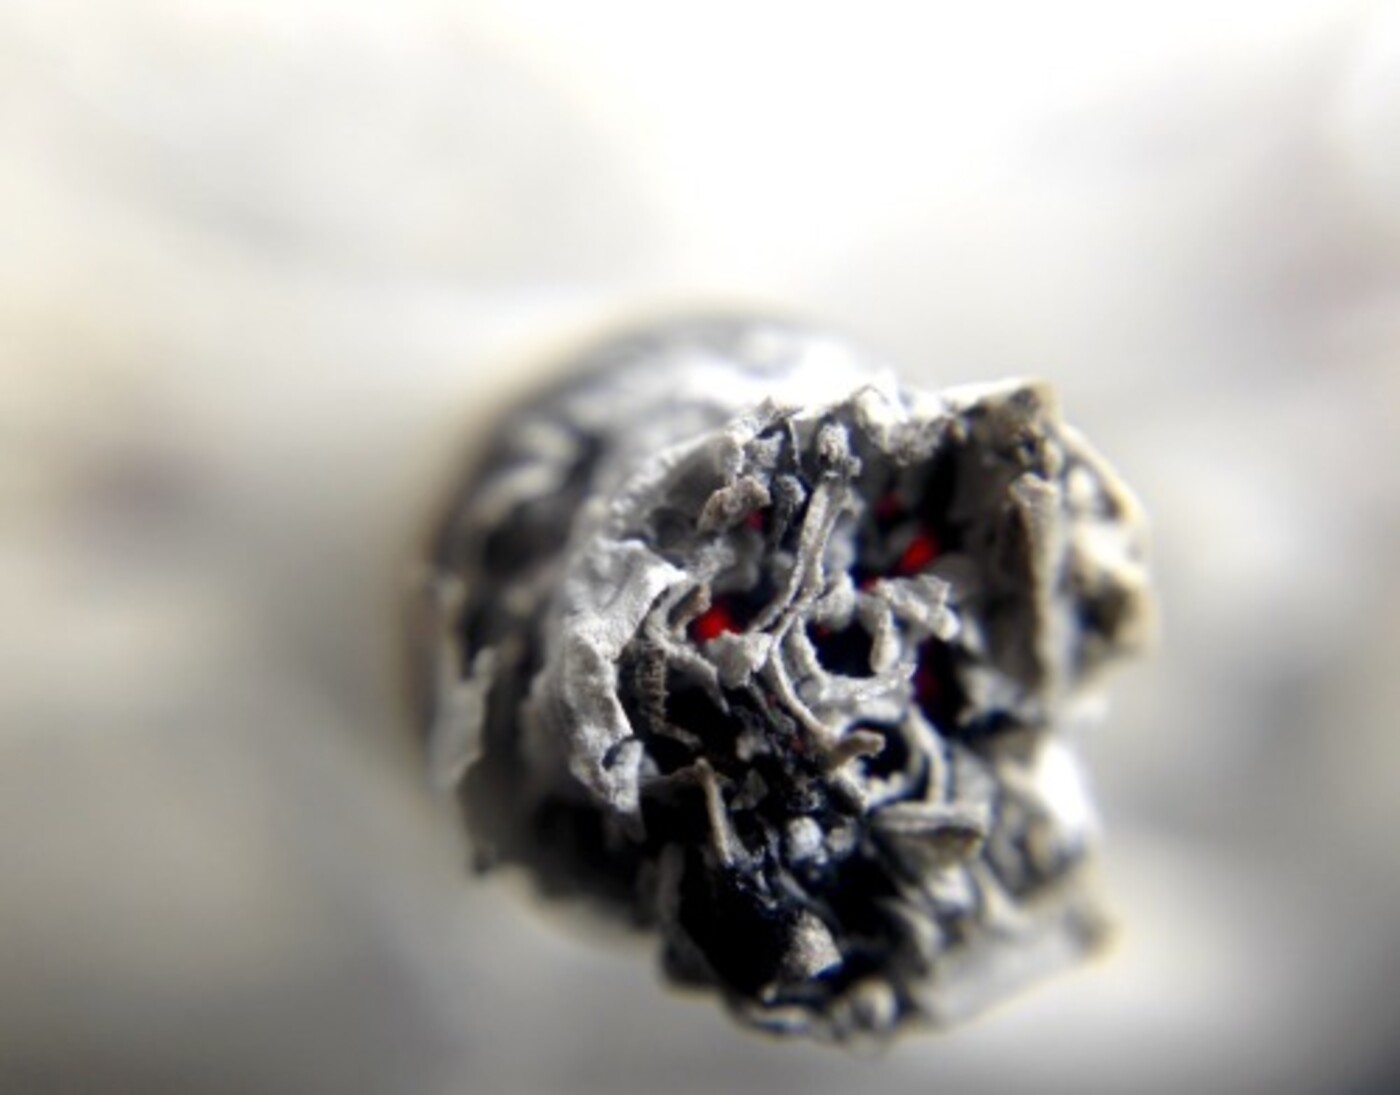 Tabakslobby gaat ondergronds